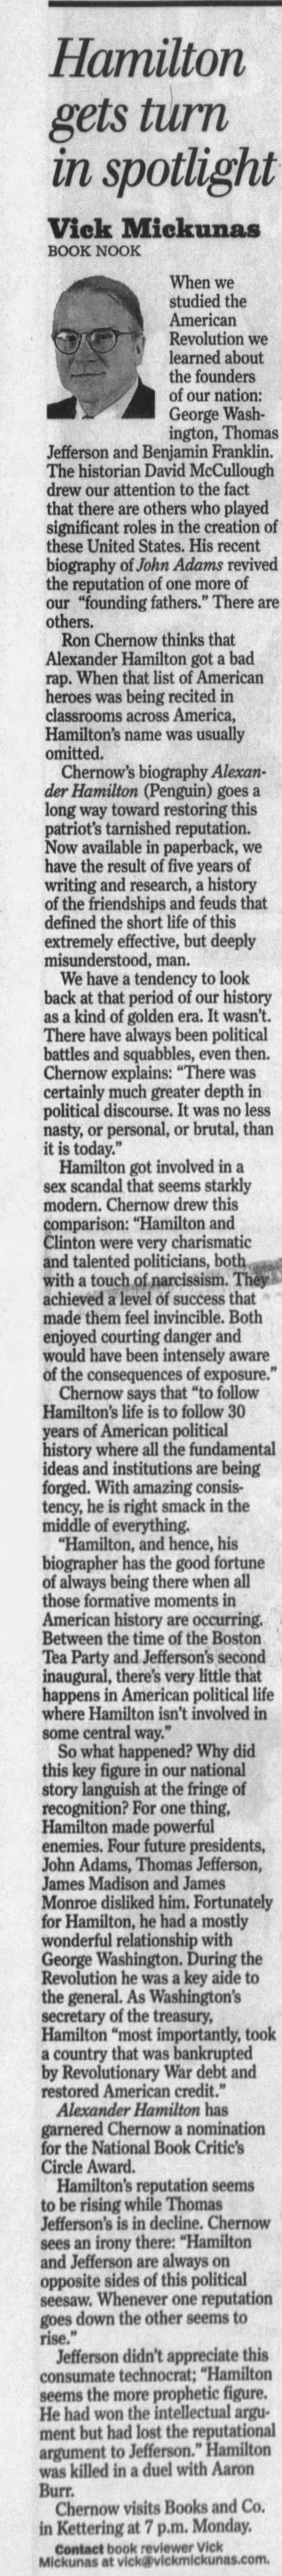 Hamilton - Dayton Daily News